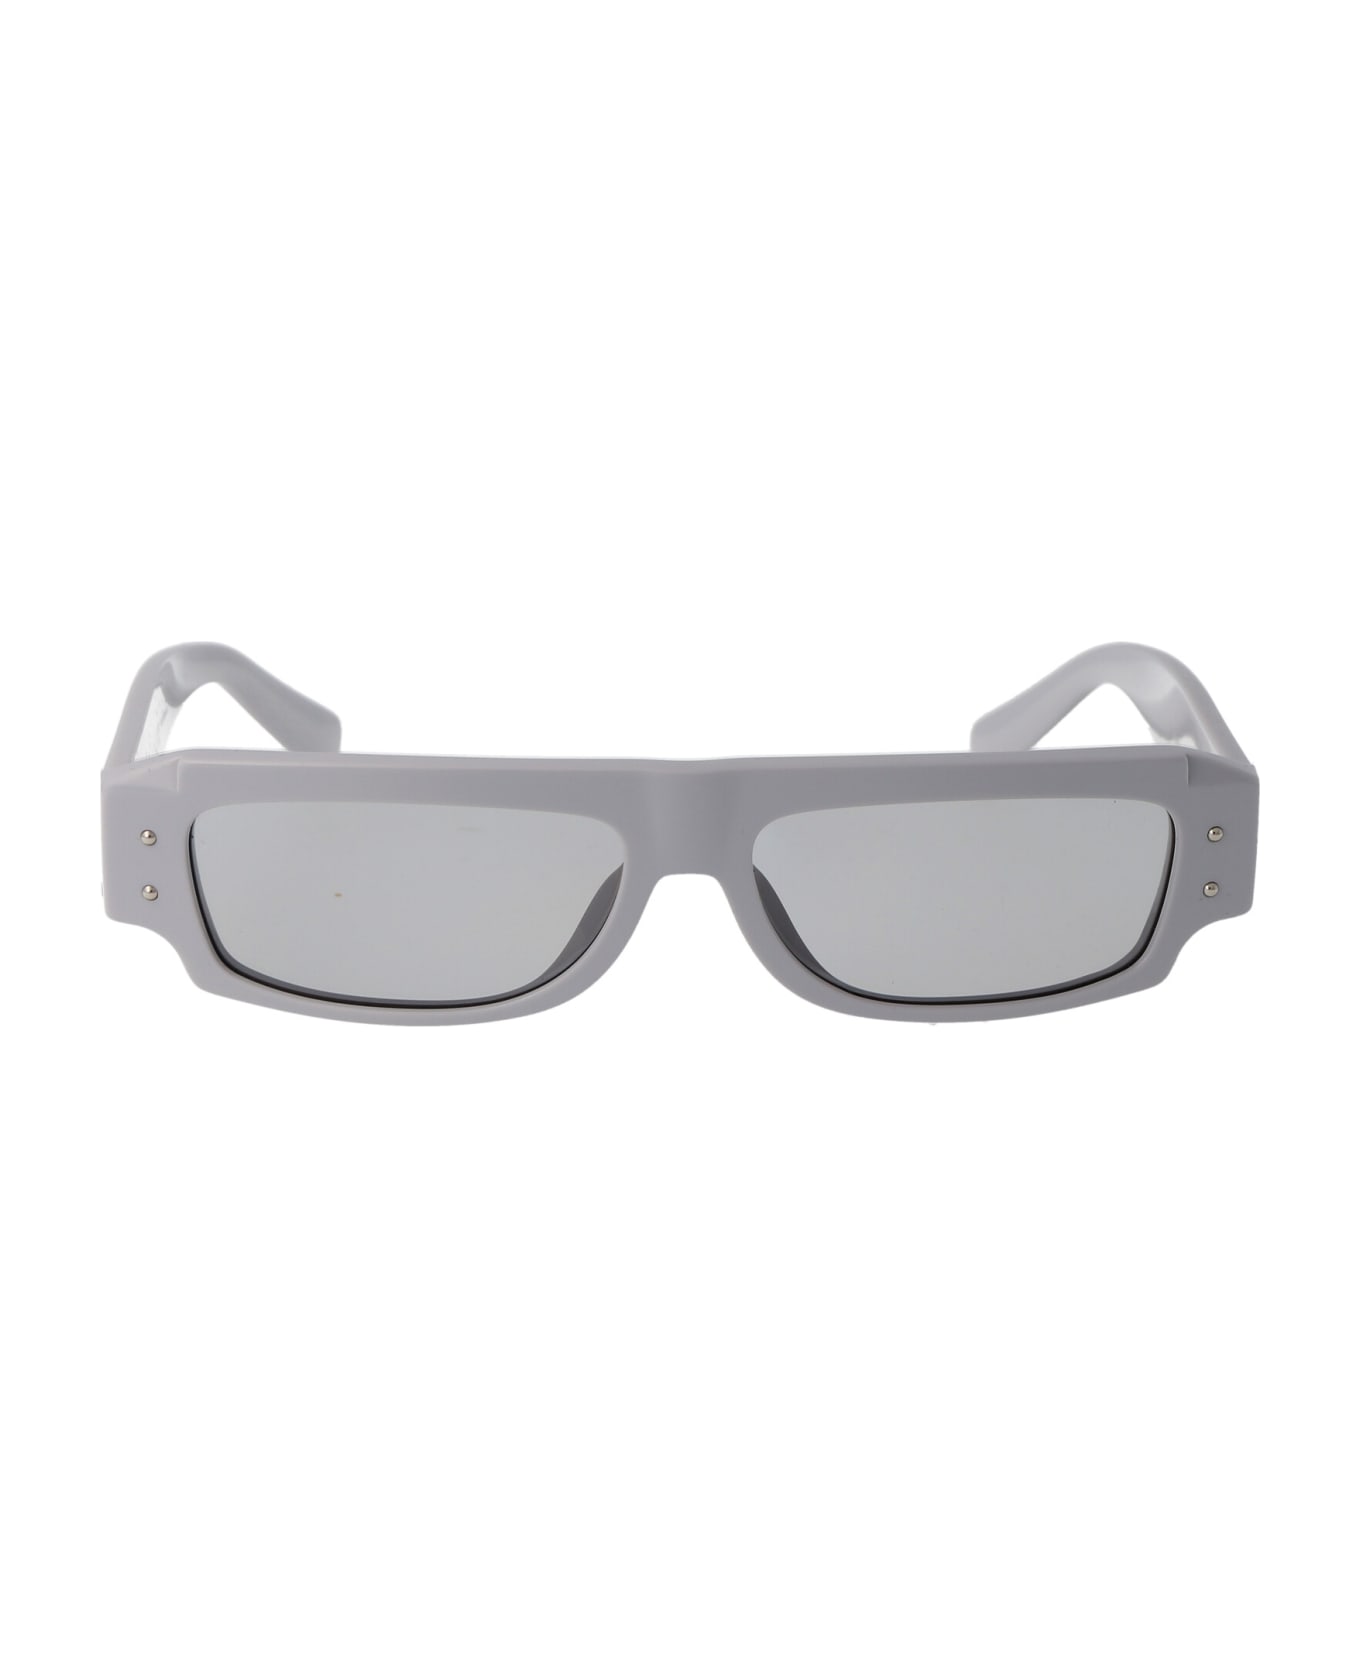 Dolce & Gabbana Eyewear 0dg4458 Sunglasses - 341887 Light Grey